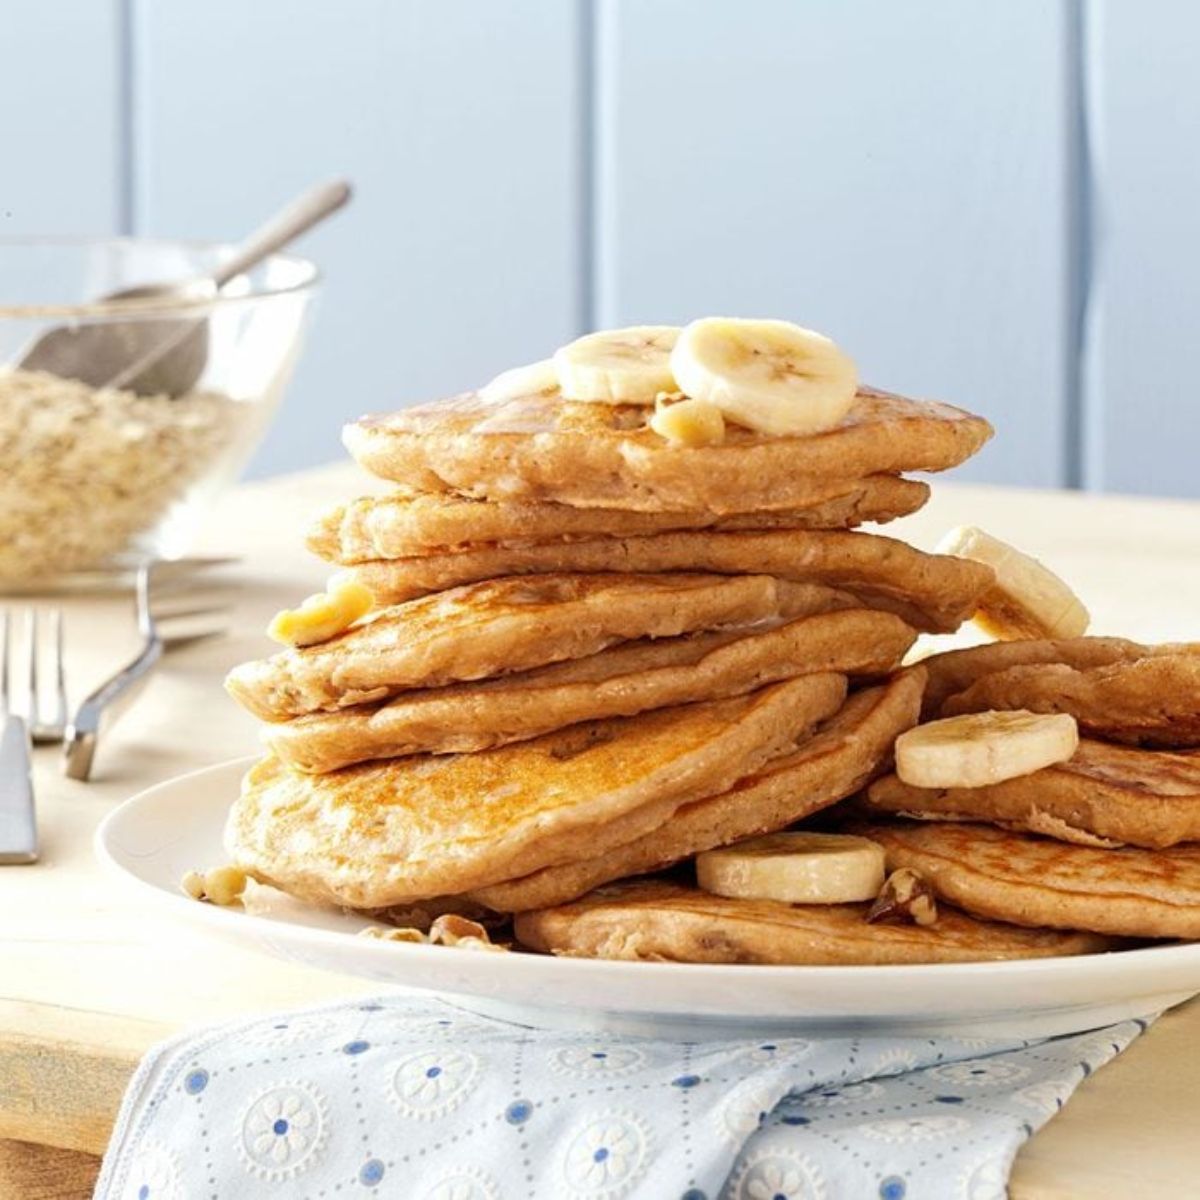 A pile of banana oatmeal pancakes on a white plate.